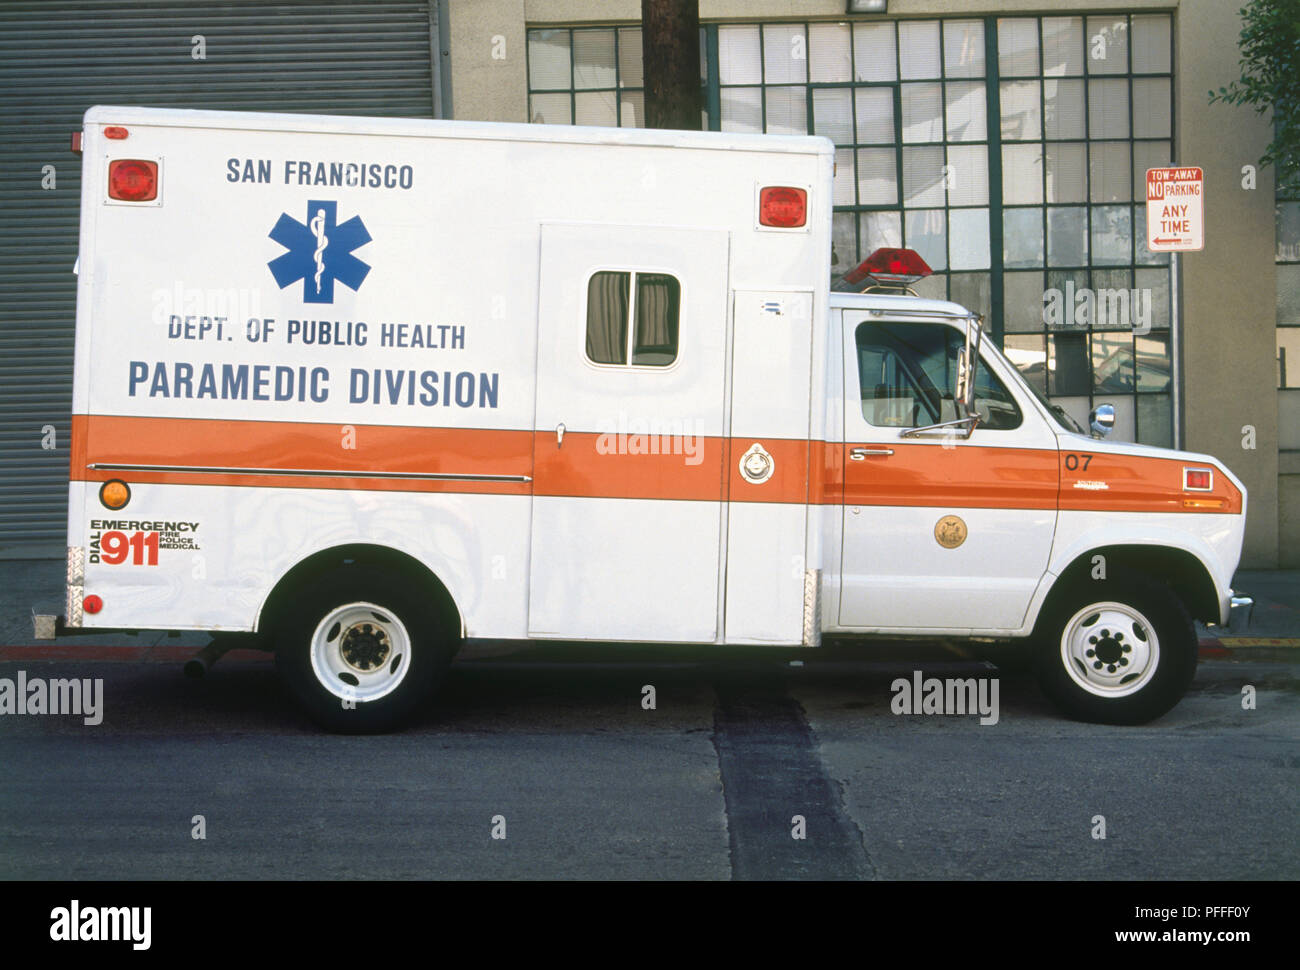 USA, California, San Francisco, ambulance parked in street Stock Photo